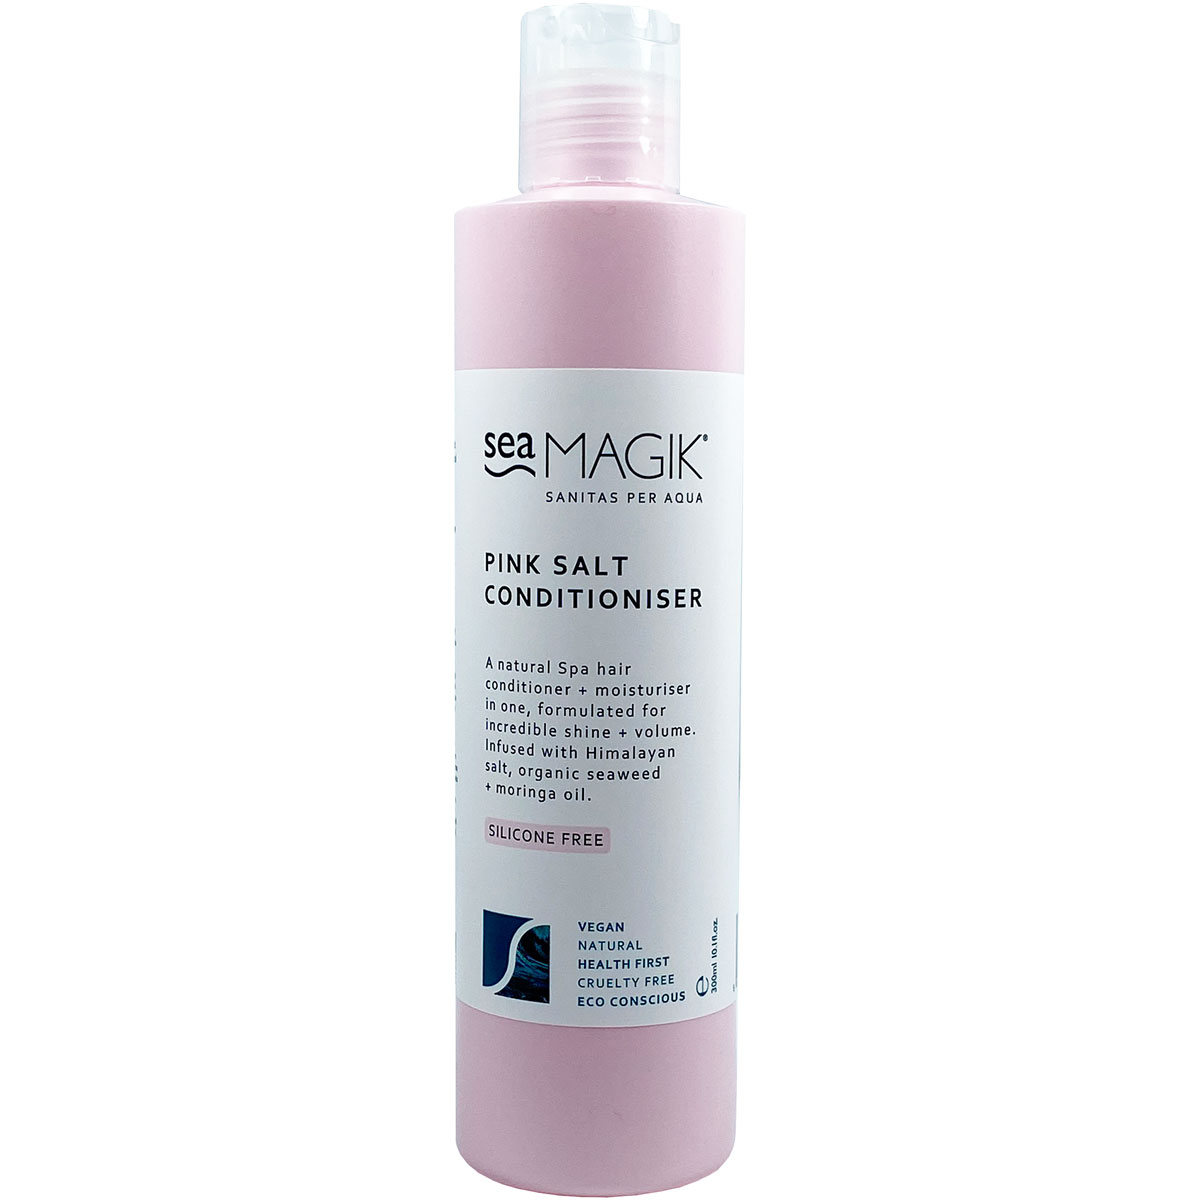 Sea Magik Pink Salt Conditioner 300ml